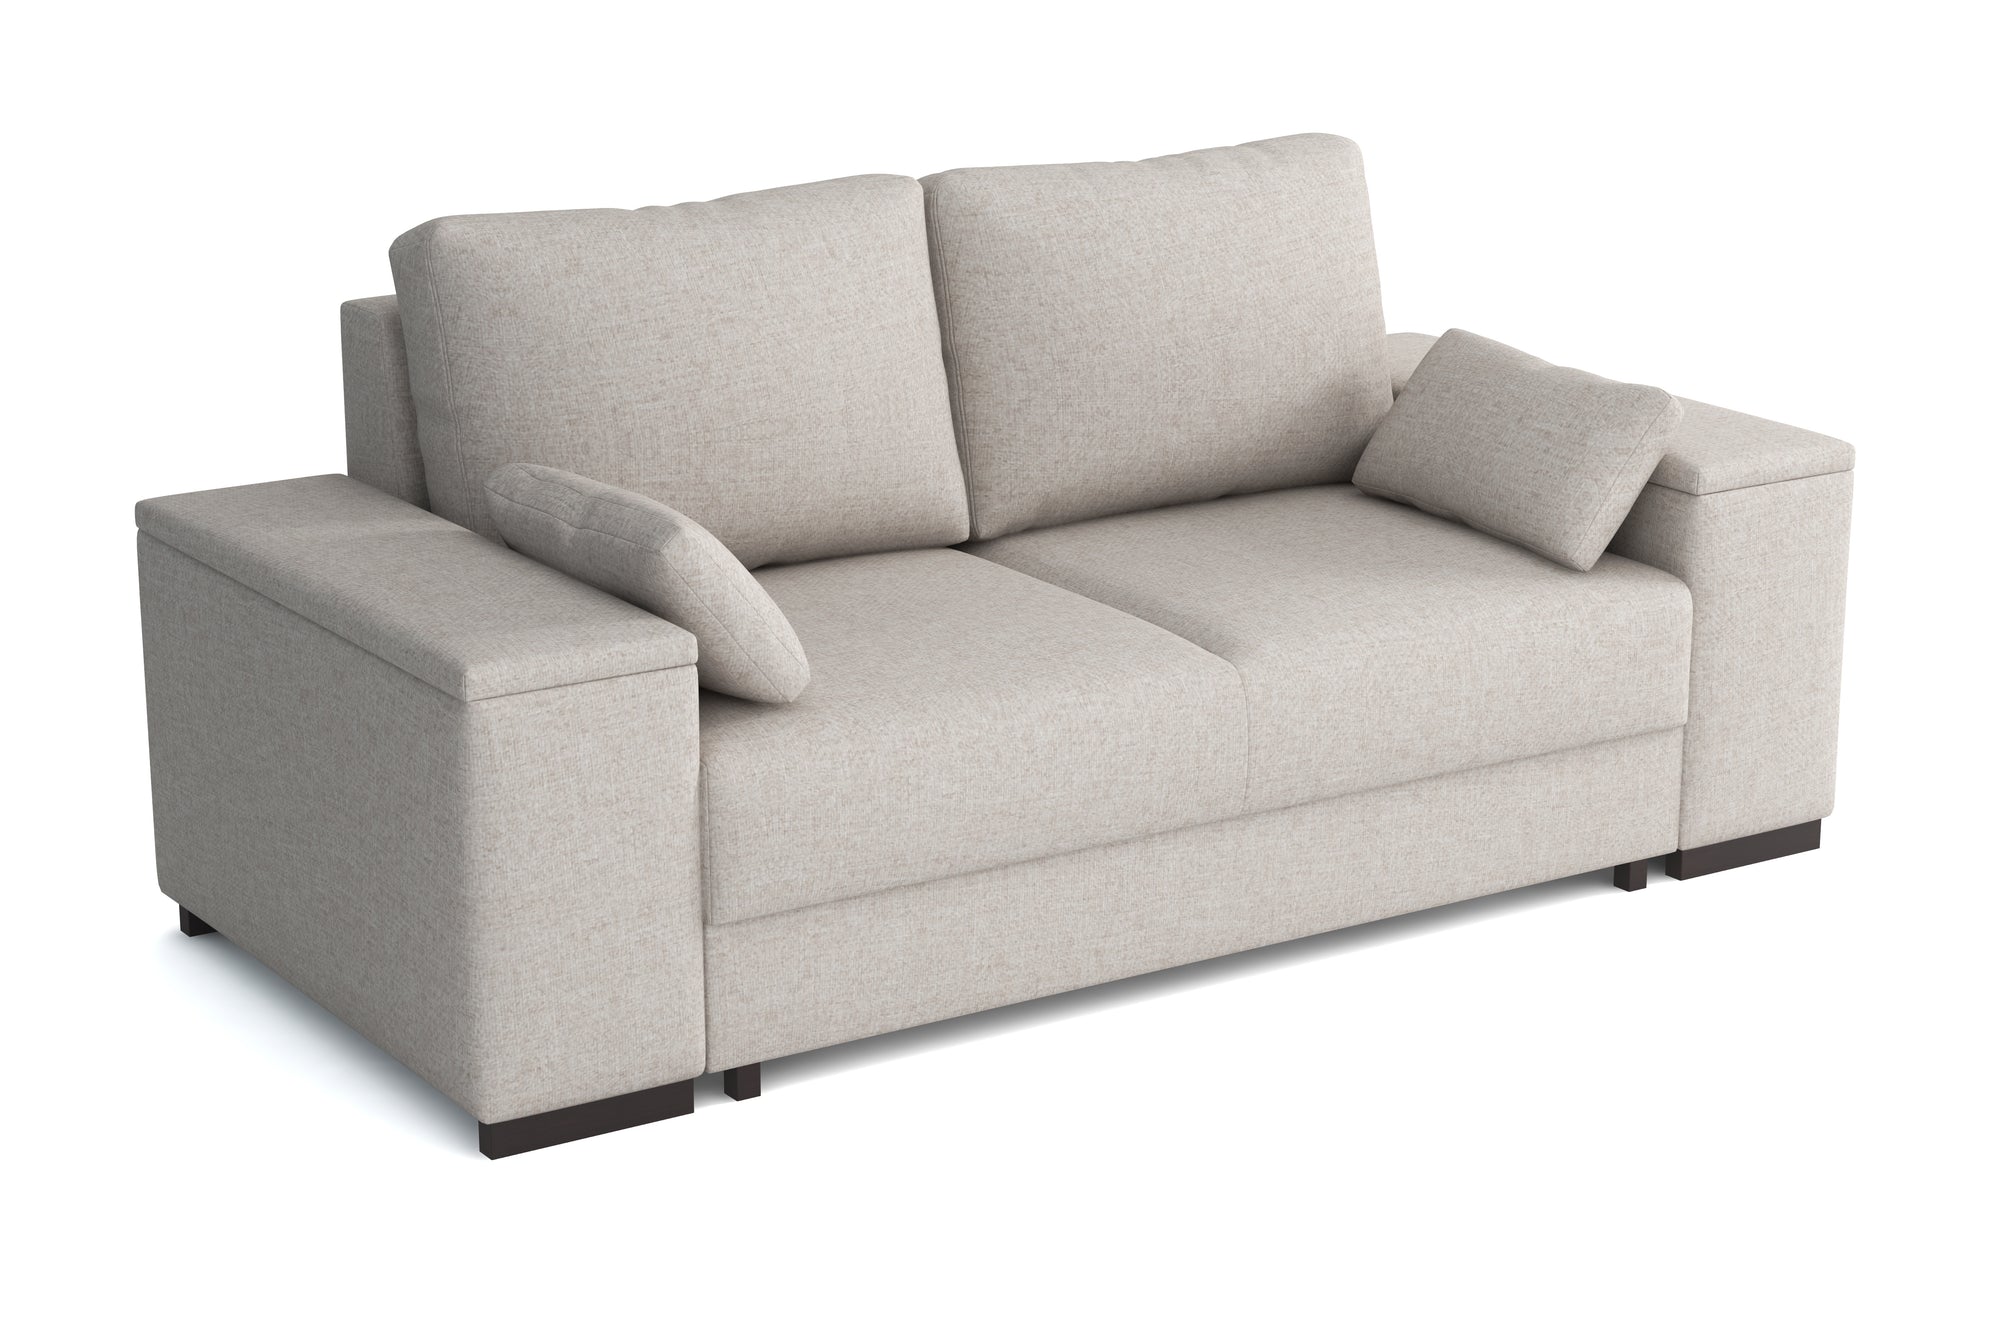 Millbrook sofa bed in light grey 